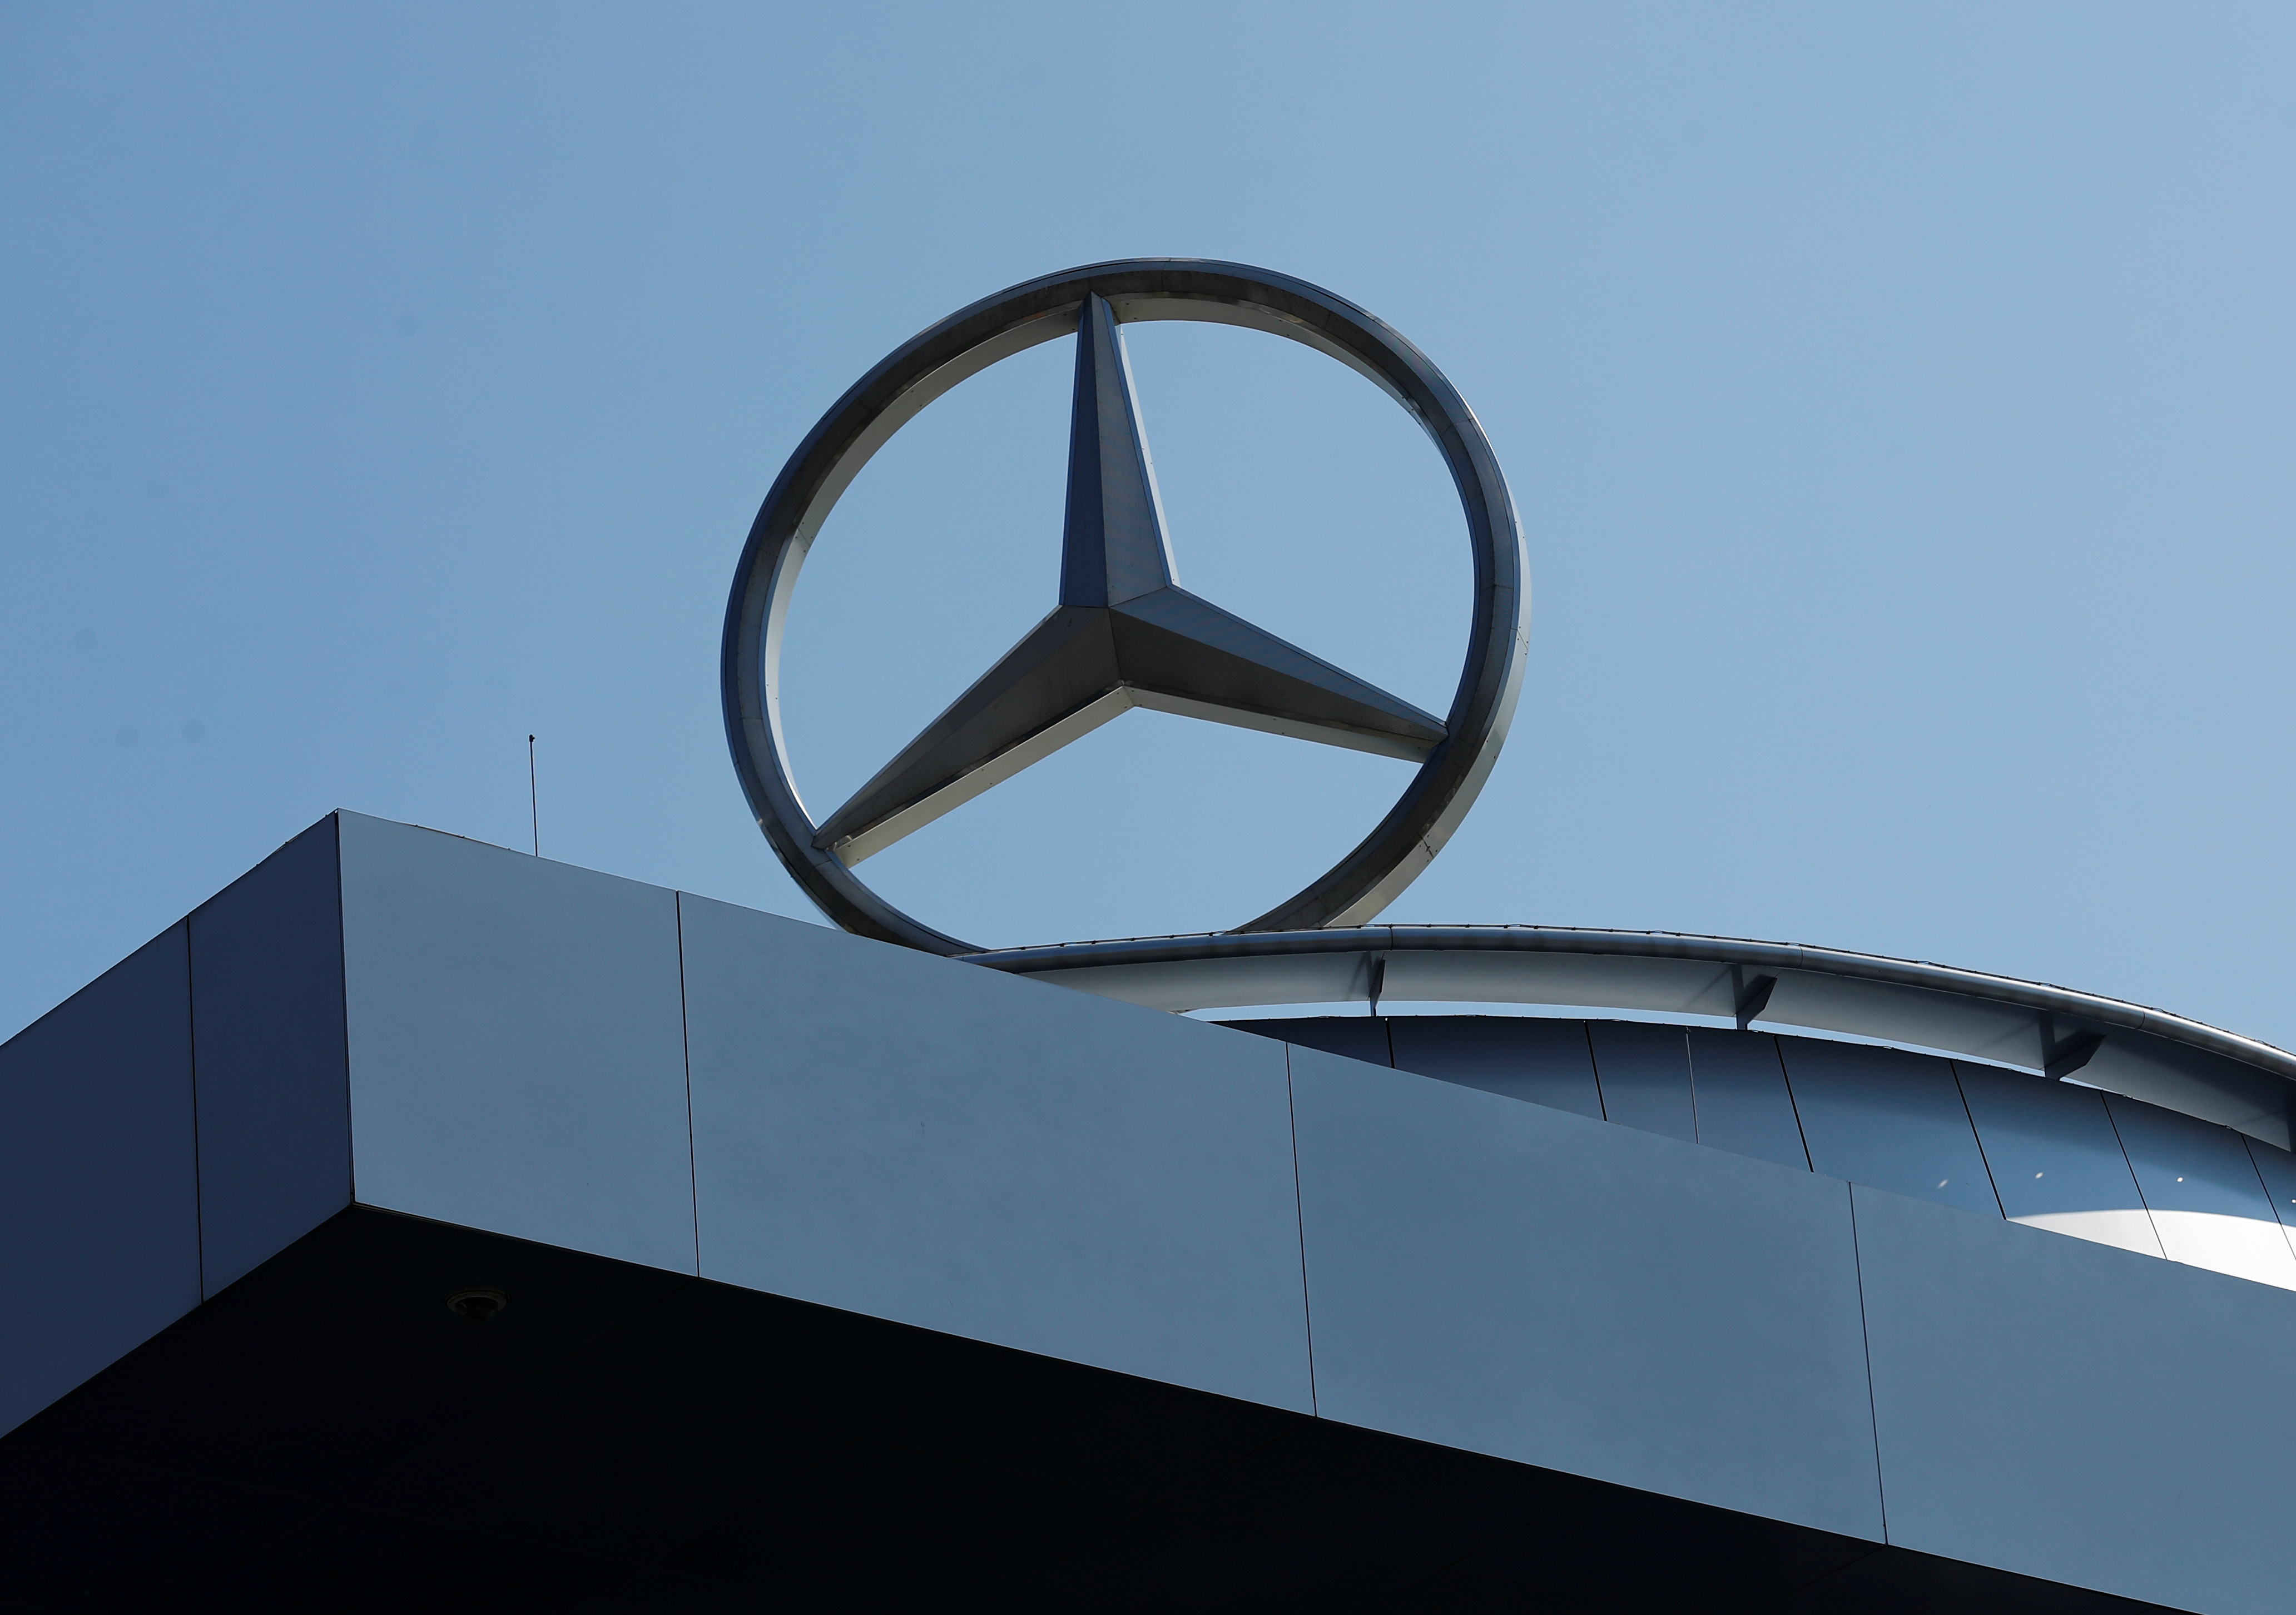 Mercedes-Benz AG  Mercedes-Benz Group > Company > Business Units >  Mercedes-Benz AG